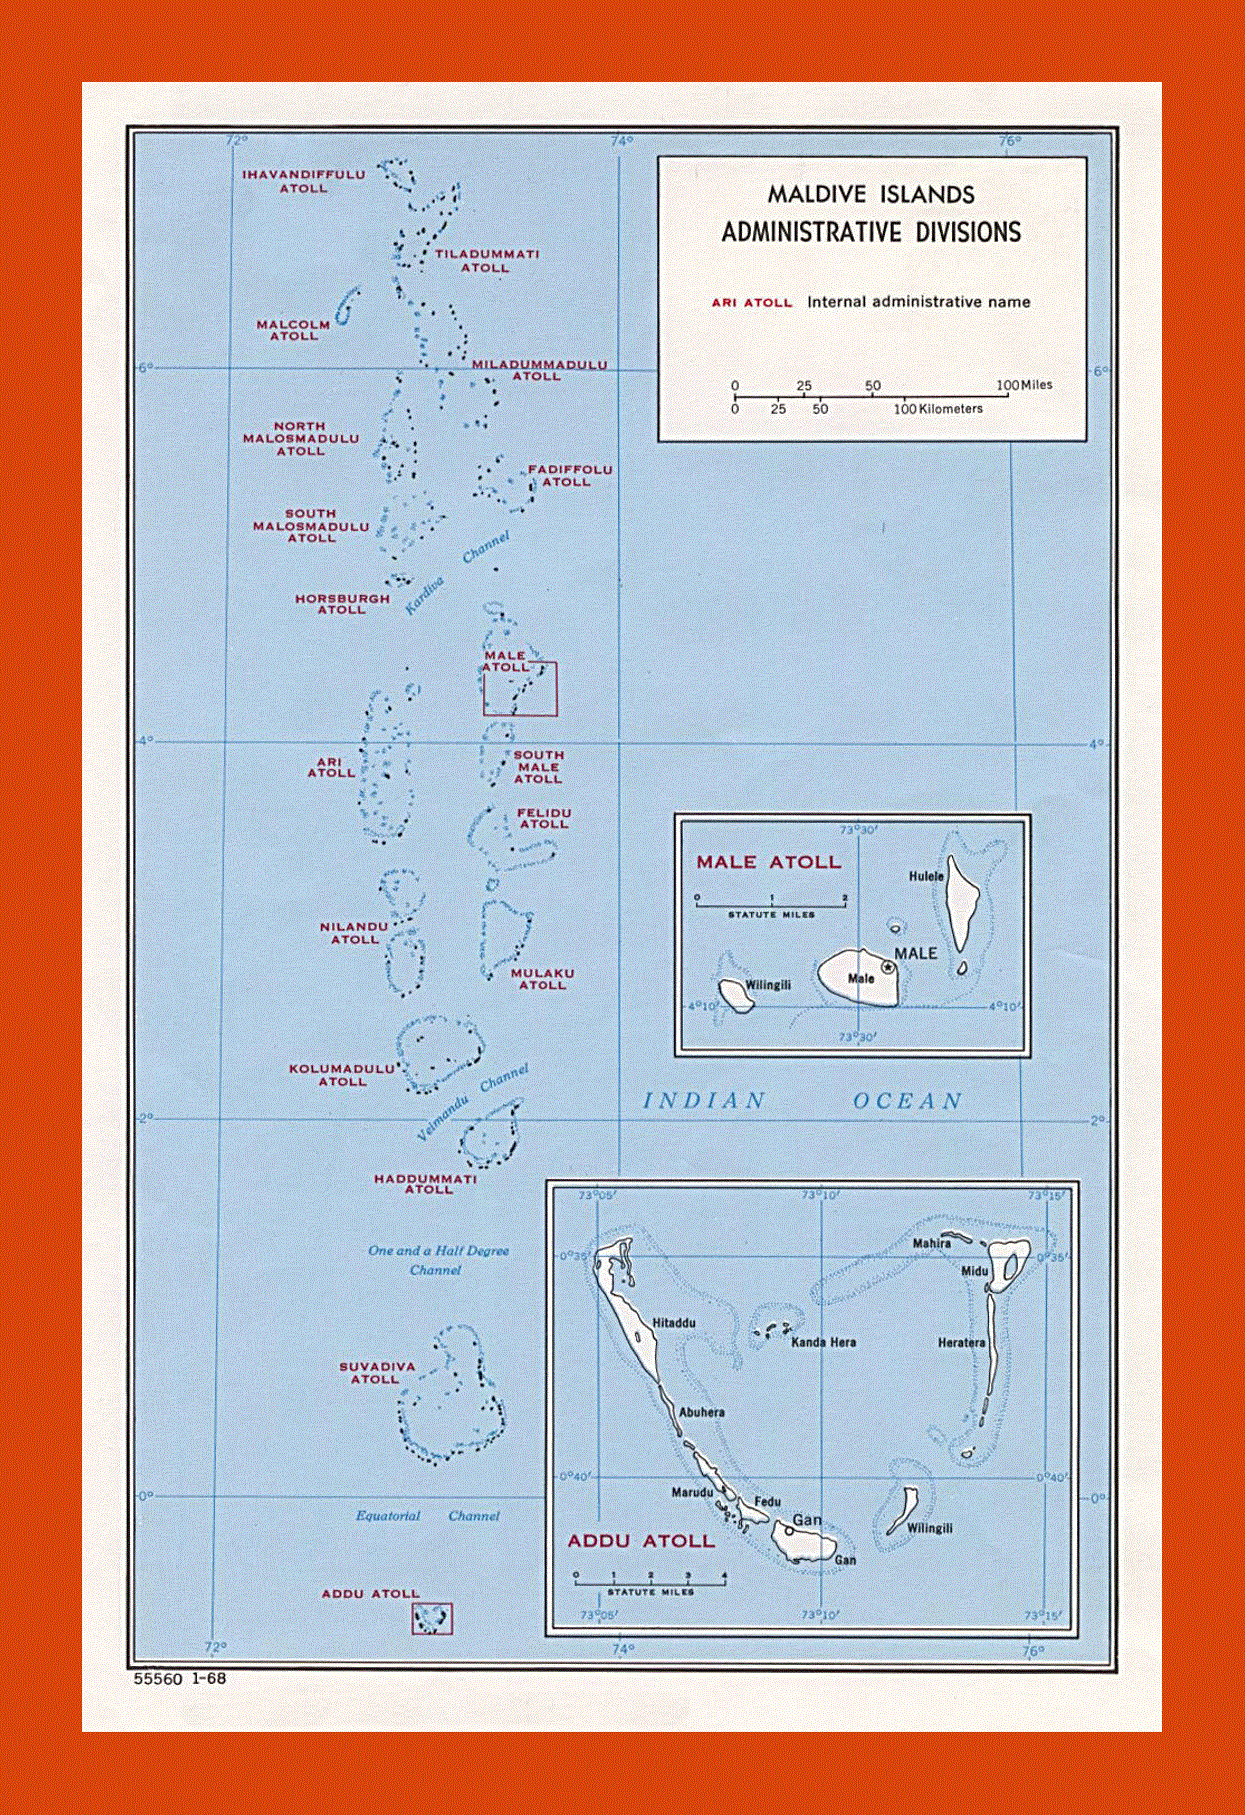 Administrative divisions map of Maldives - 1968